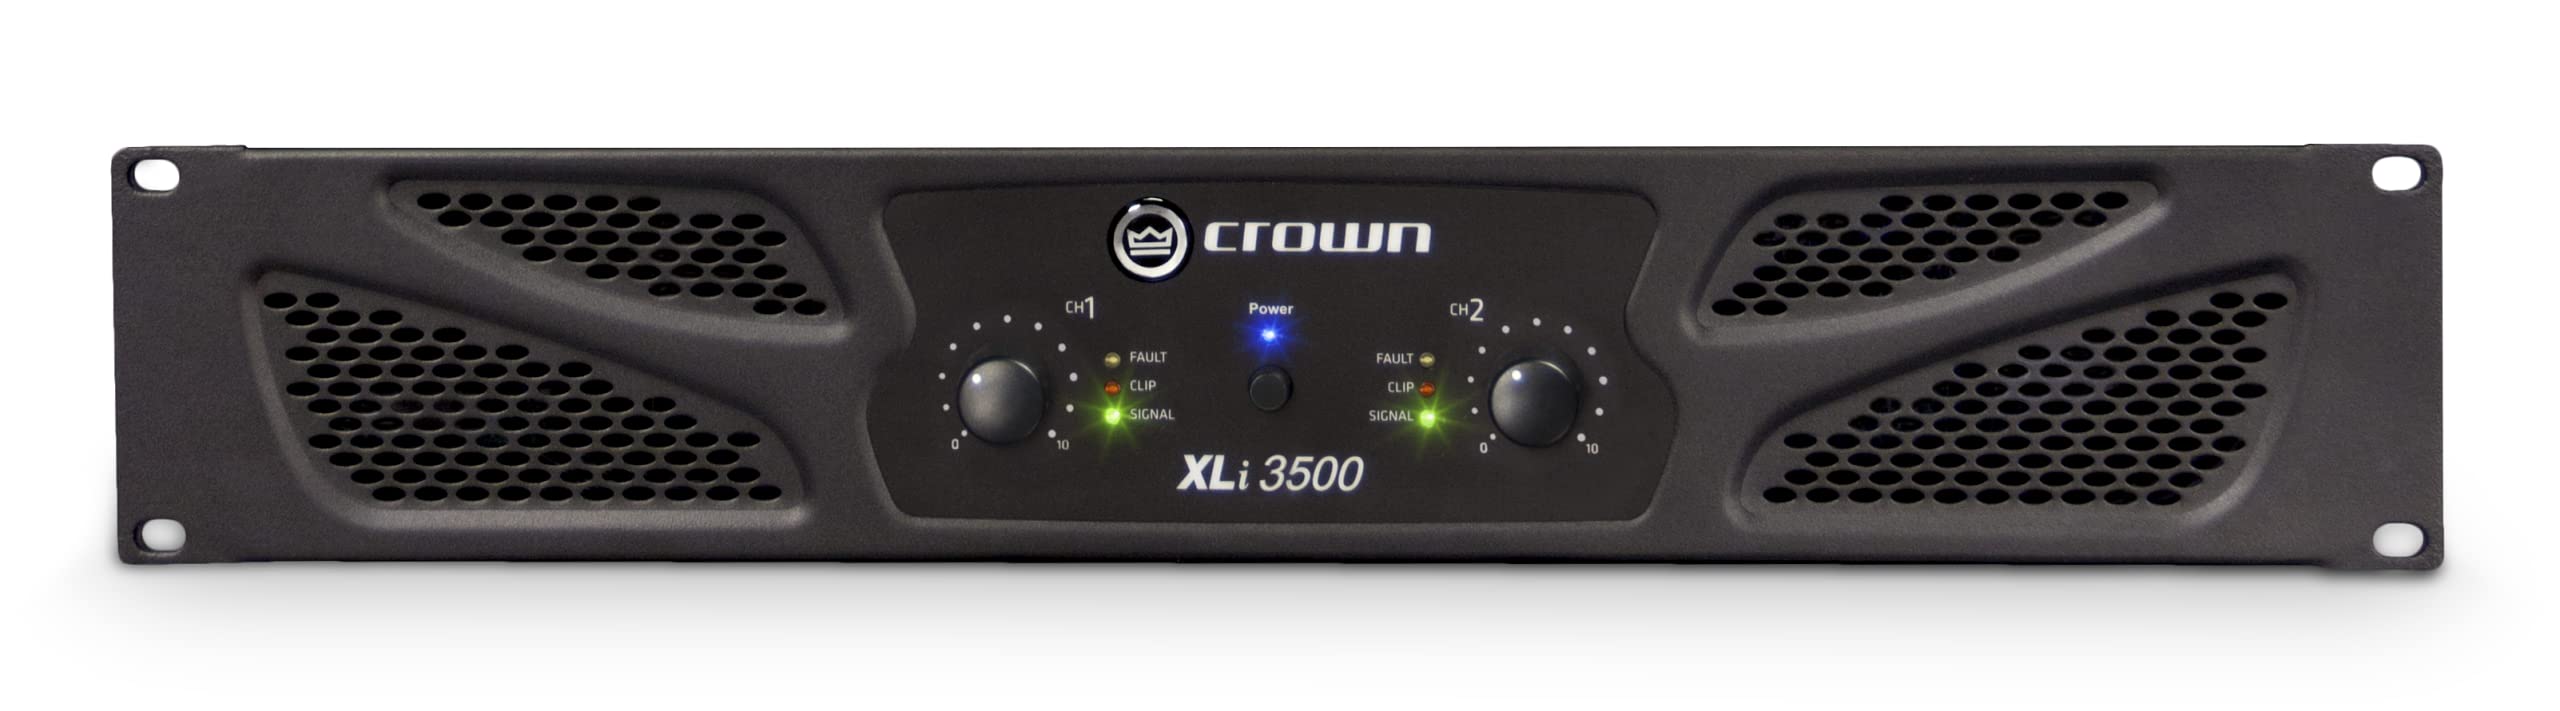 Crown XLi3500 Zweikanal, 1350 Watt bei 4Ω Leistungsverstärker